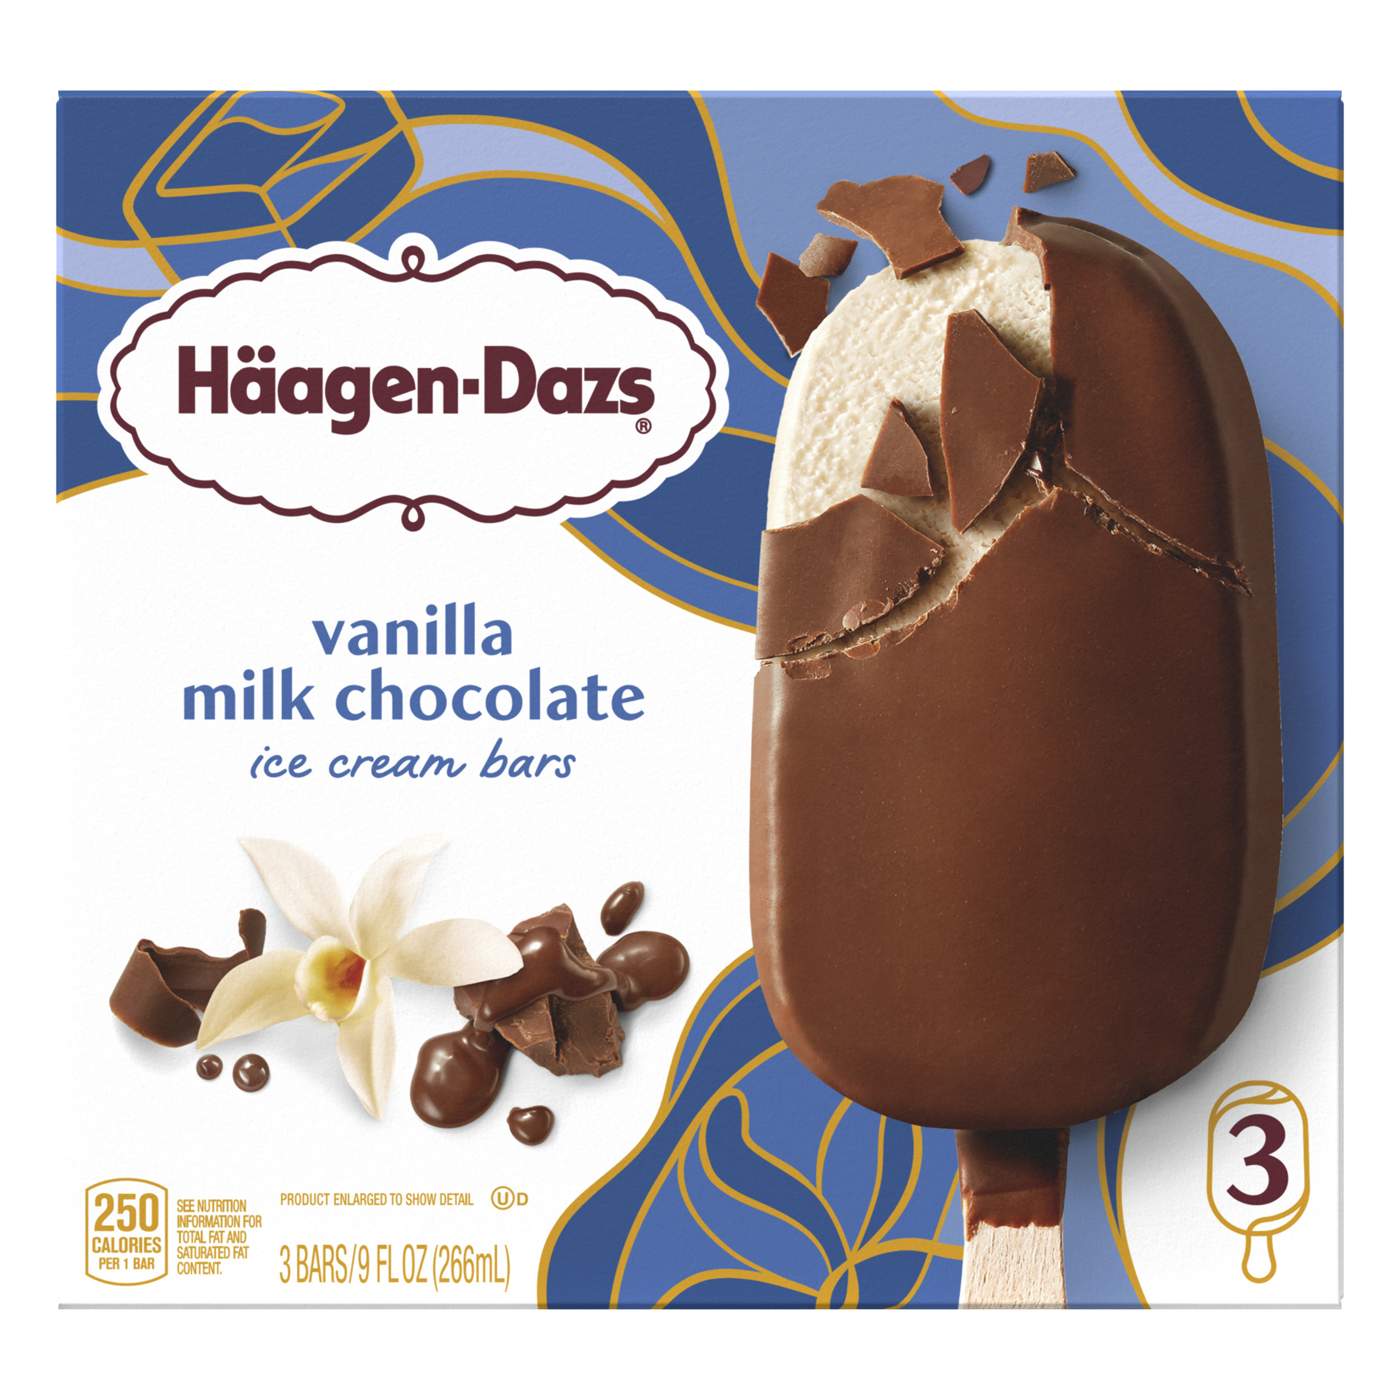 Haagen-Dazs Vanilla Milk Chocolate Ice Cream Bars; image 1 of 5